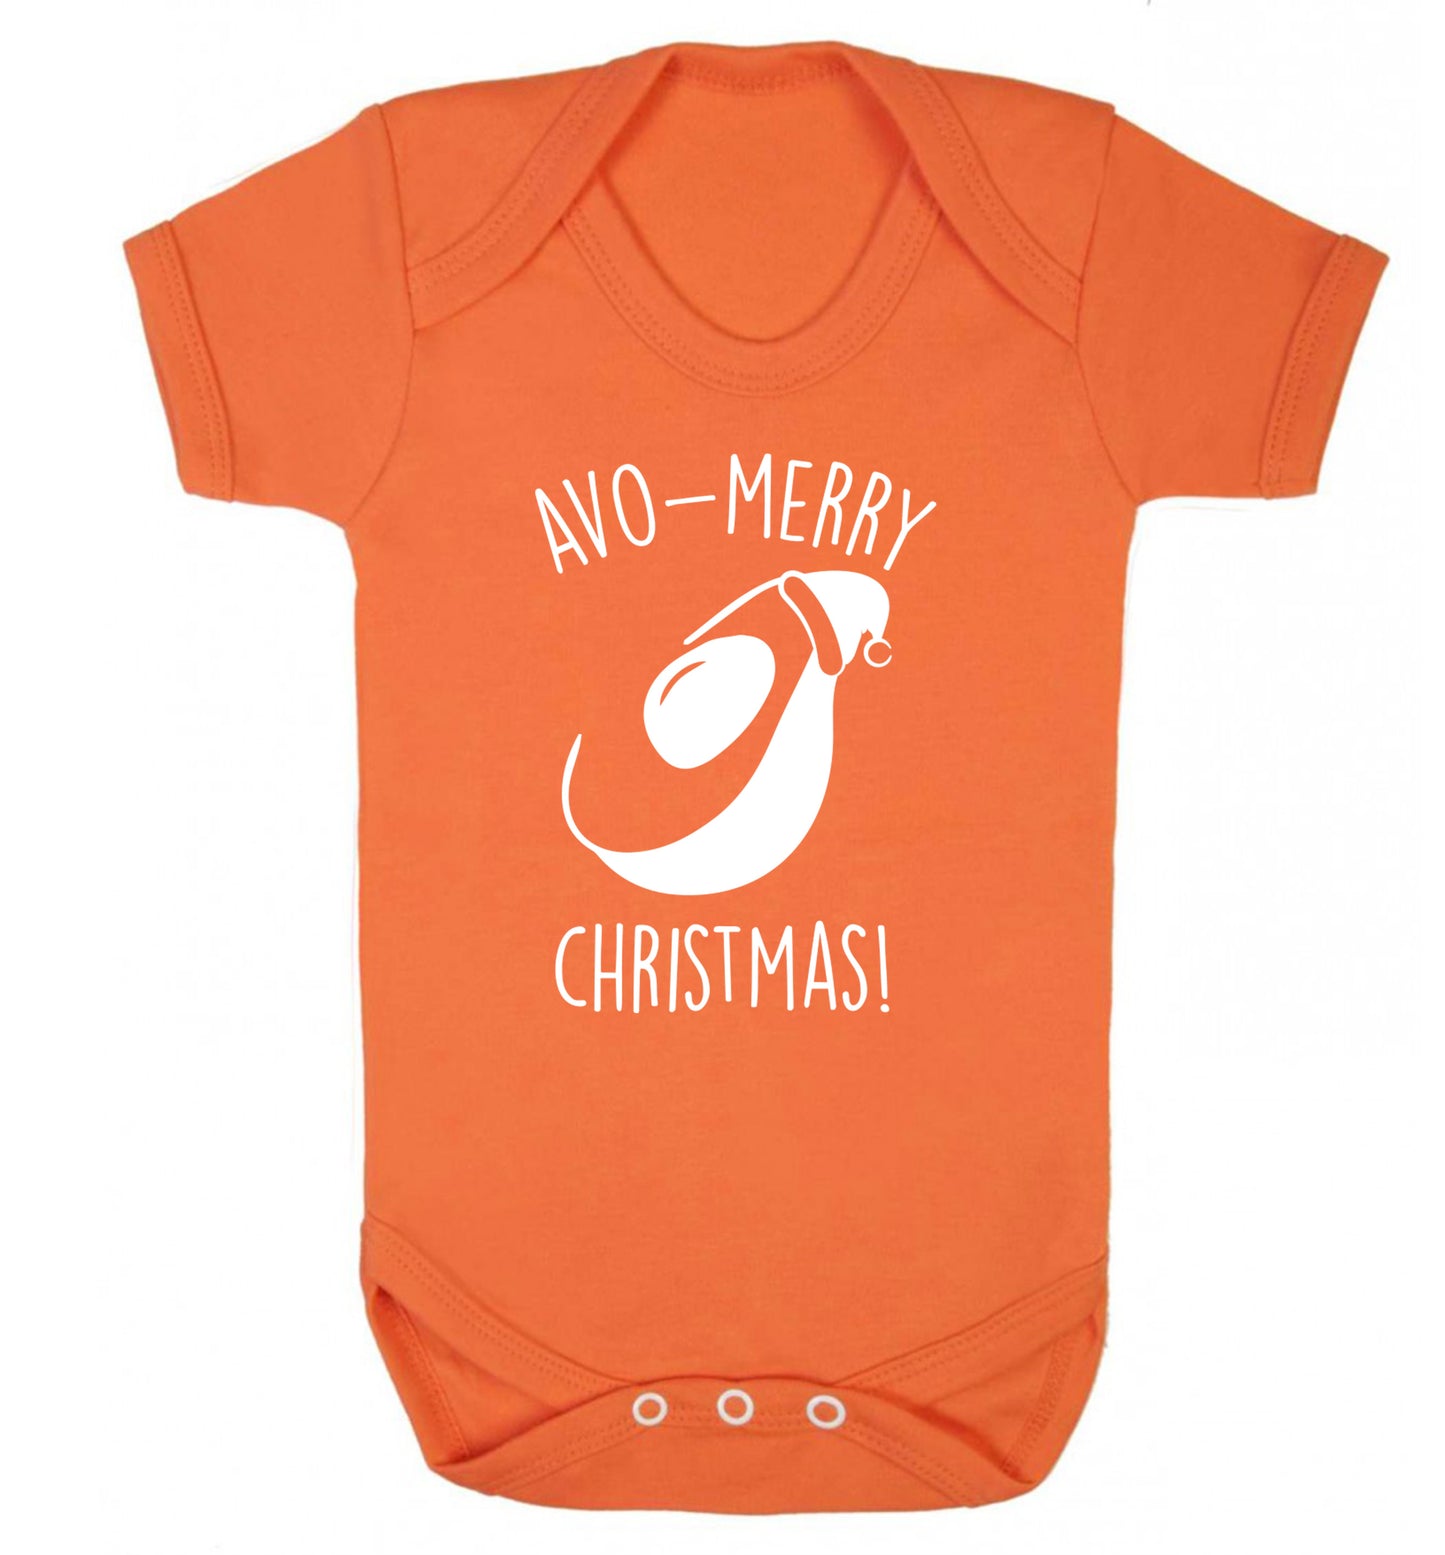 Avo-Merry Christmas Baby Vest orange 18-24 months